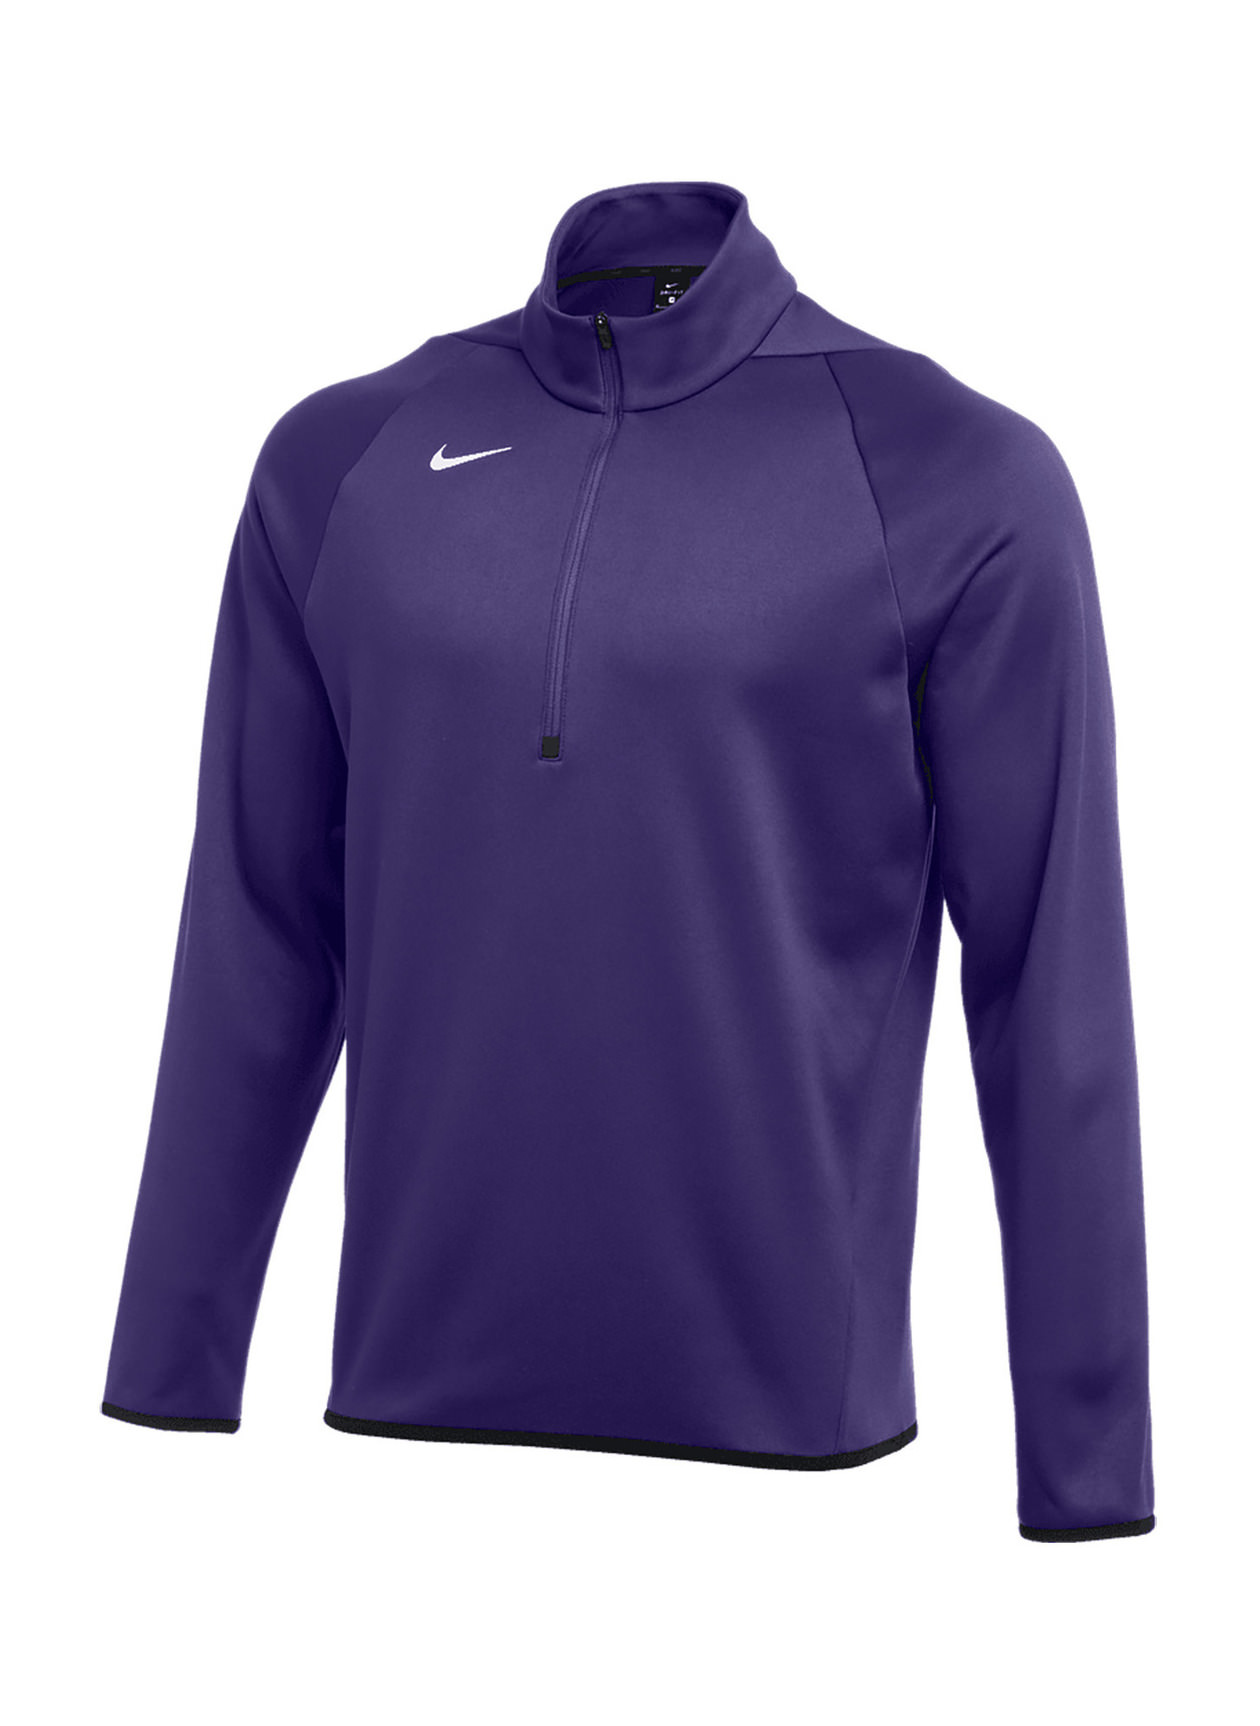 Nike Men's Team Purple-White Therma Long-Sleeve Quarter-Zip | Custom ...